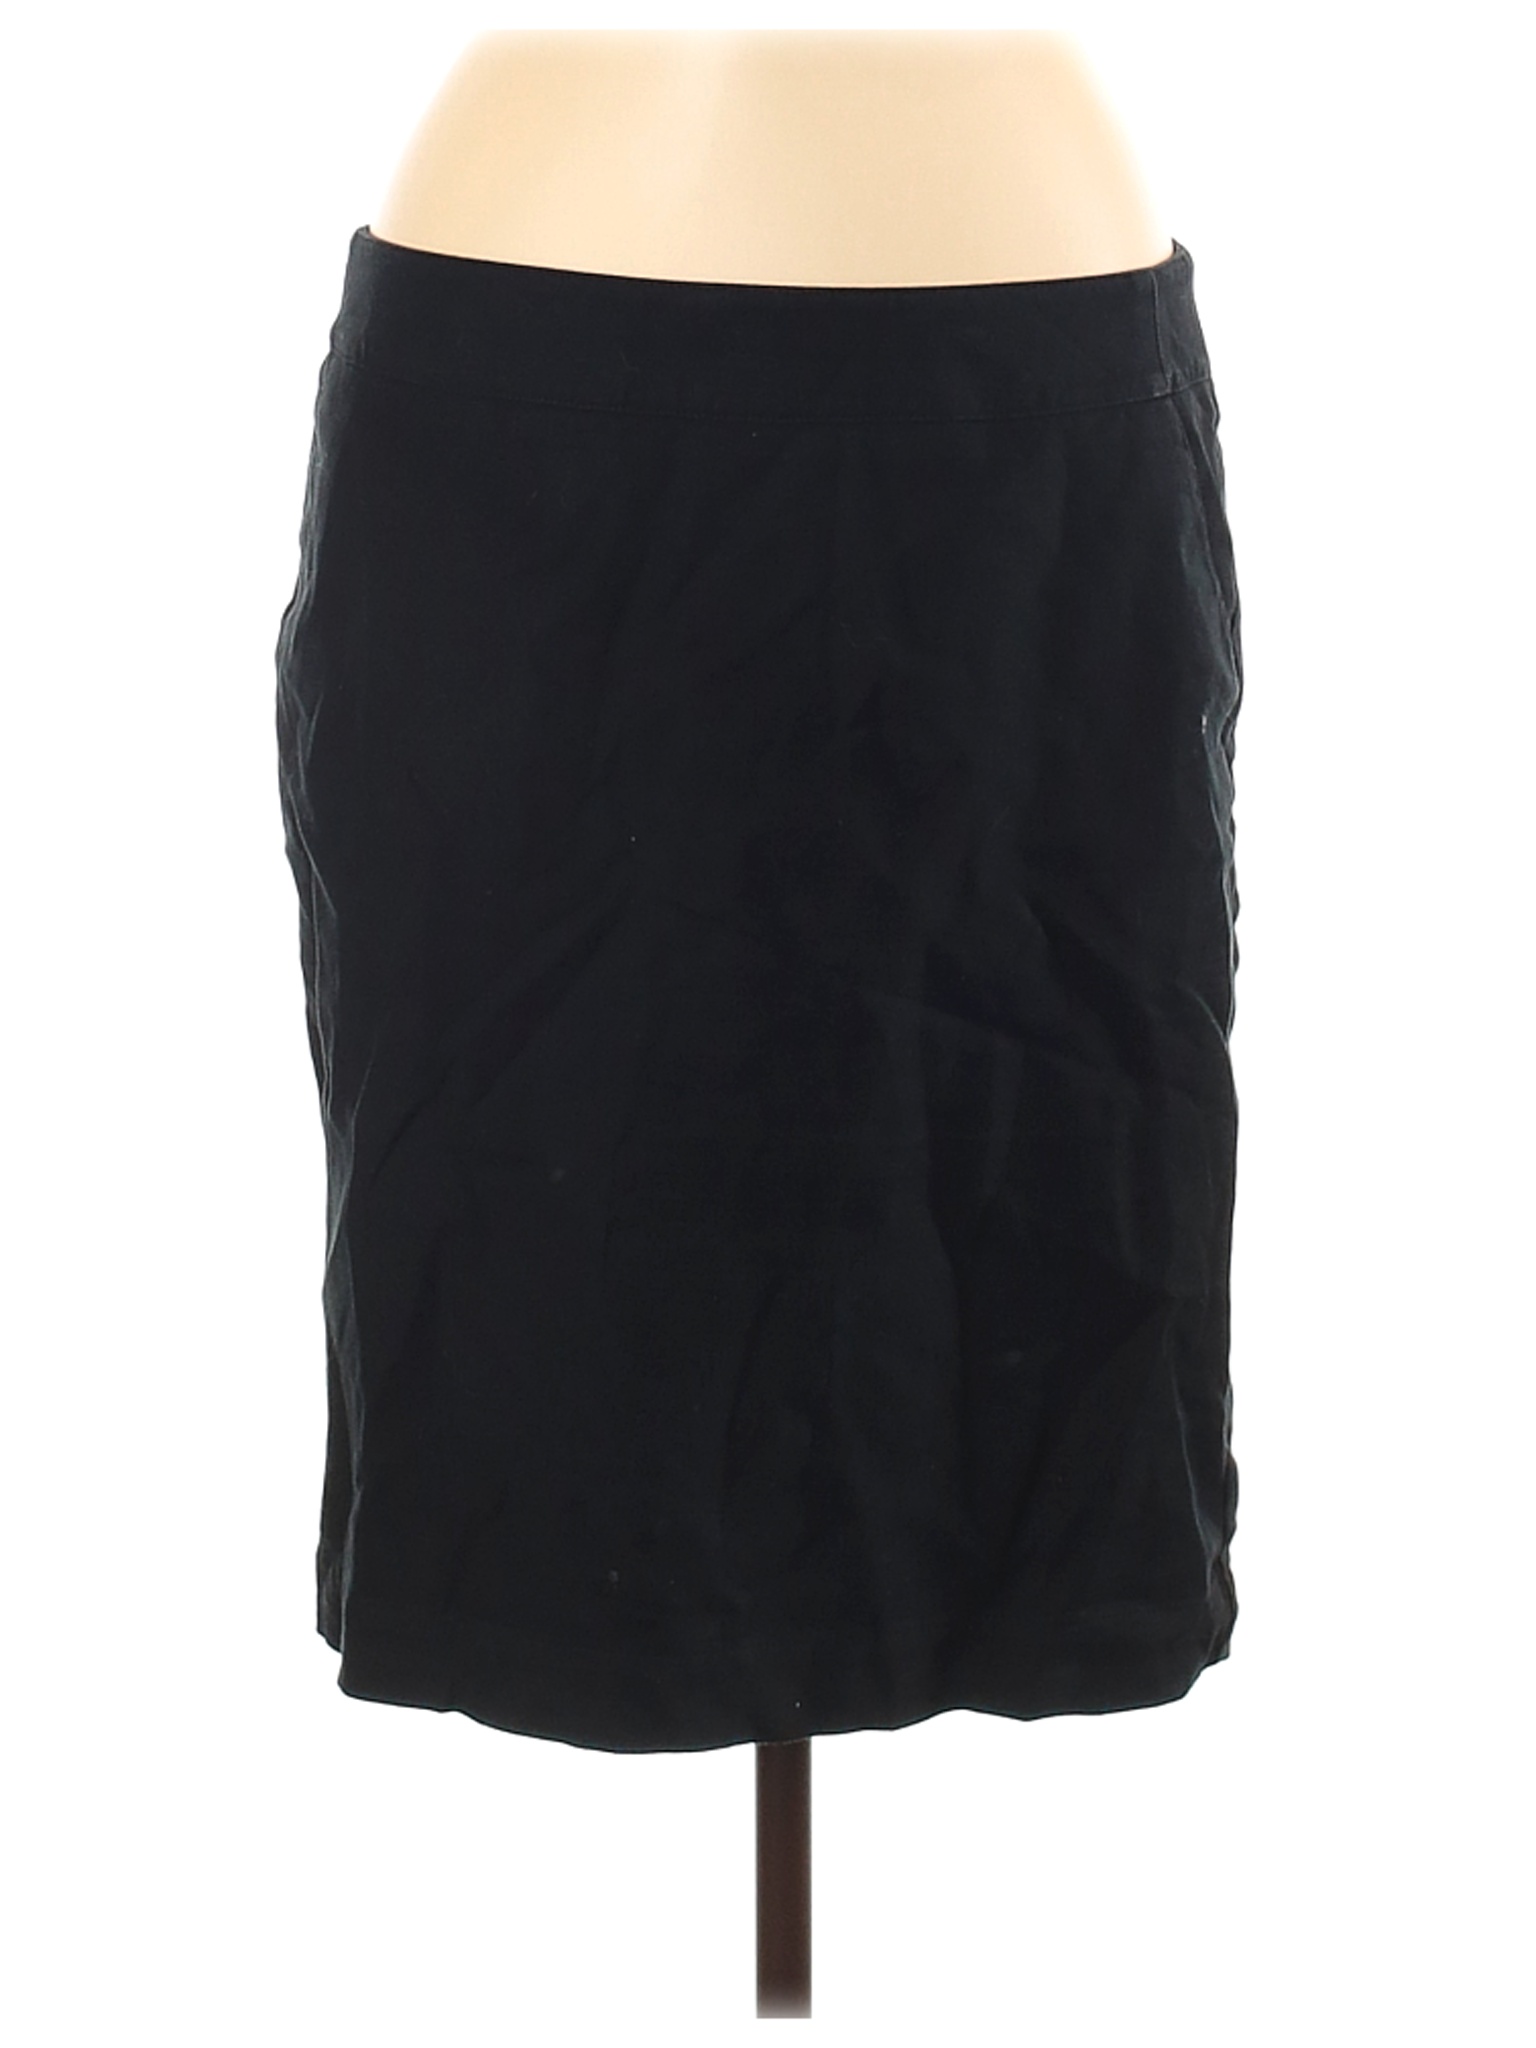 Merona Women Black Casual Skirt 8 | eBay